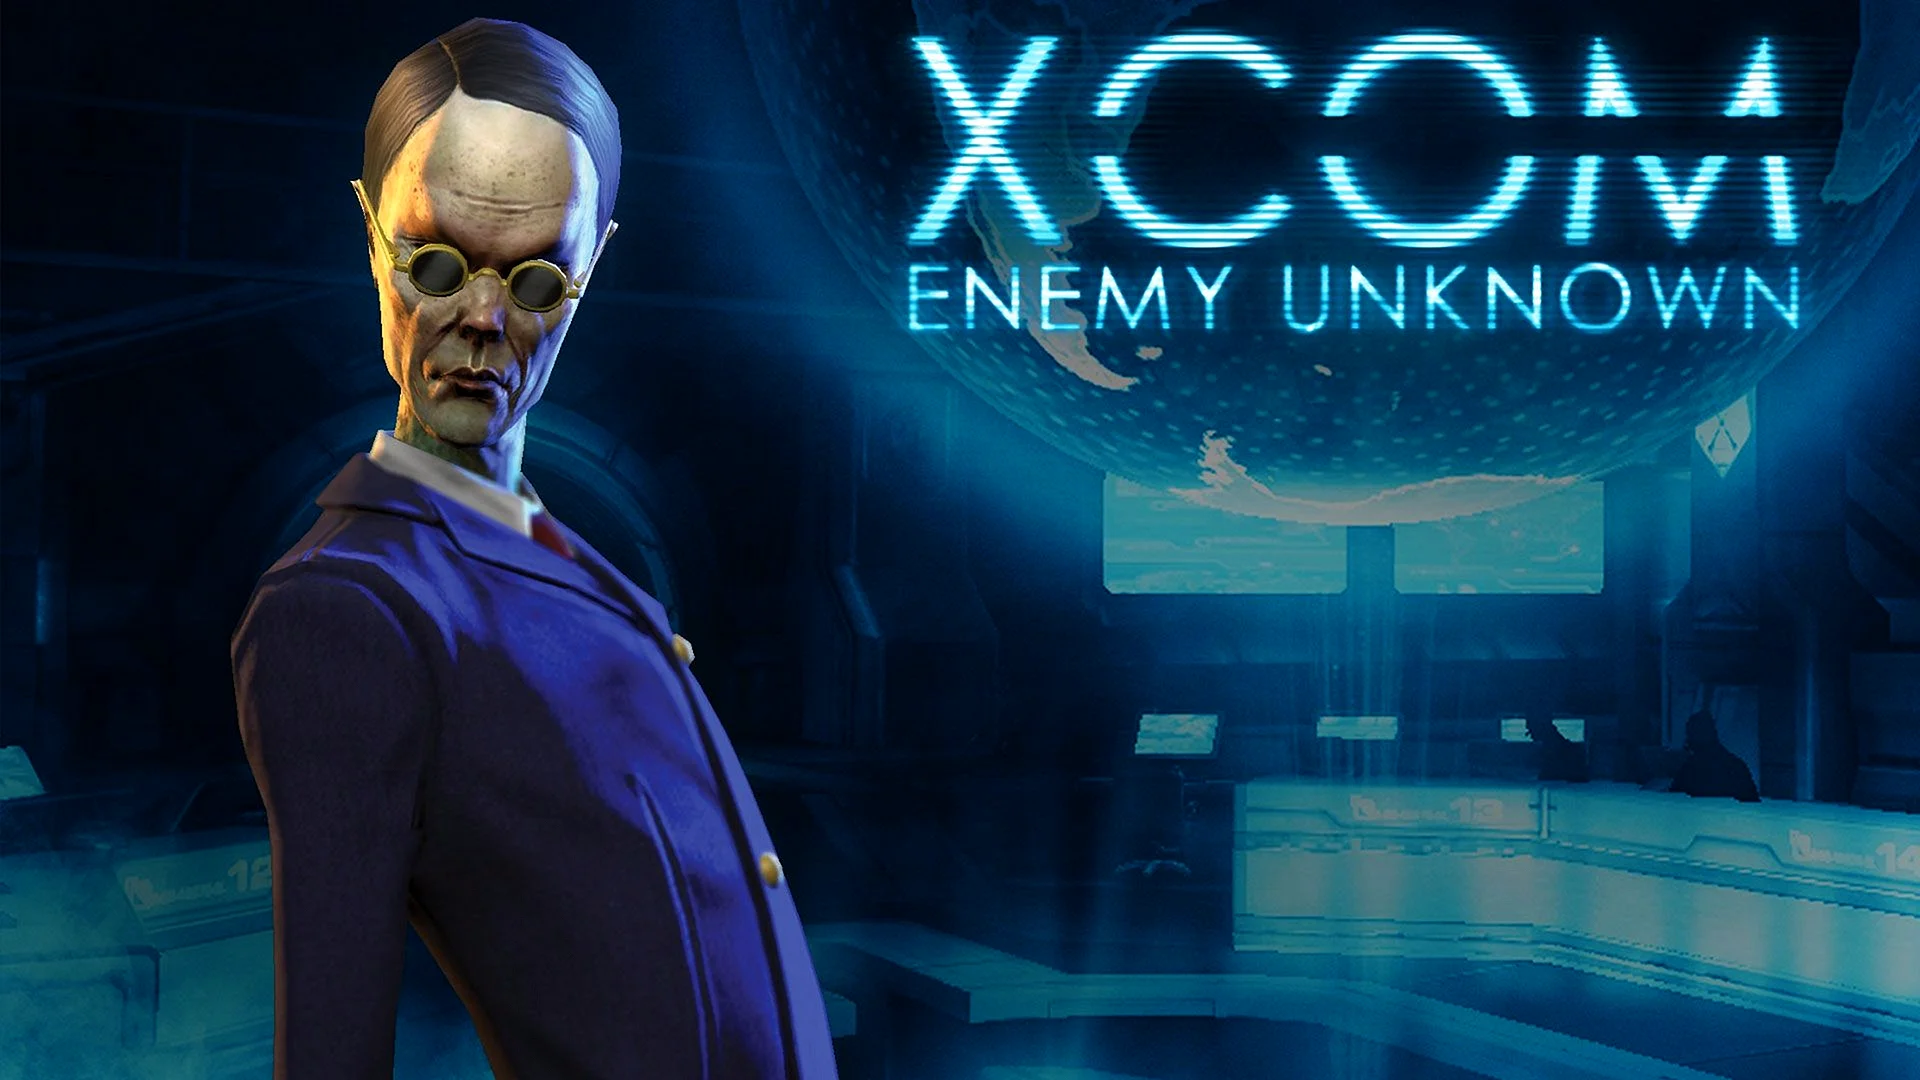 Xcom Enemy Unknown Wallpaper